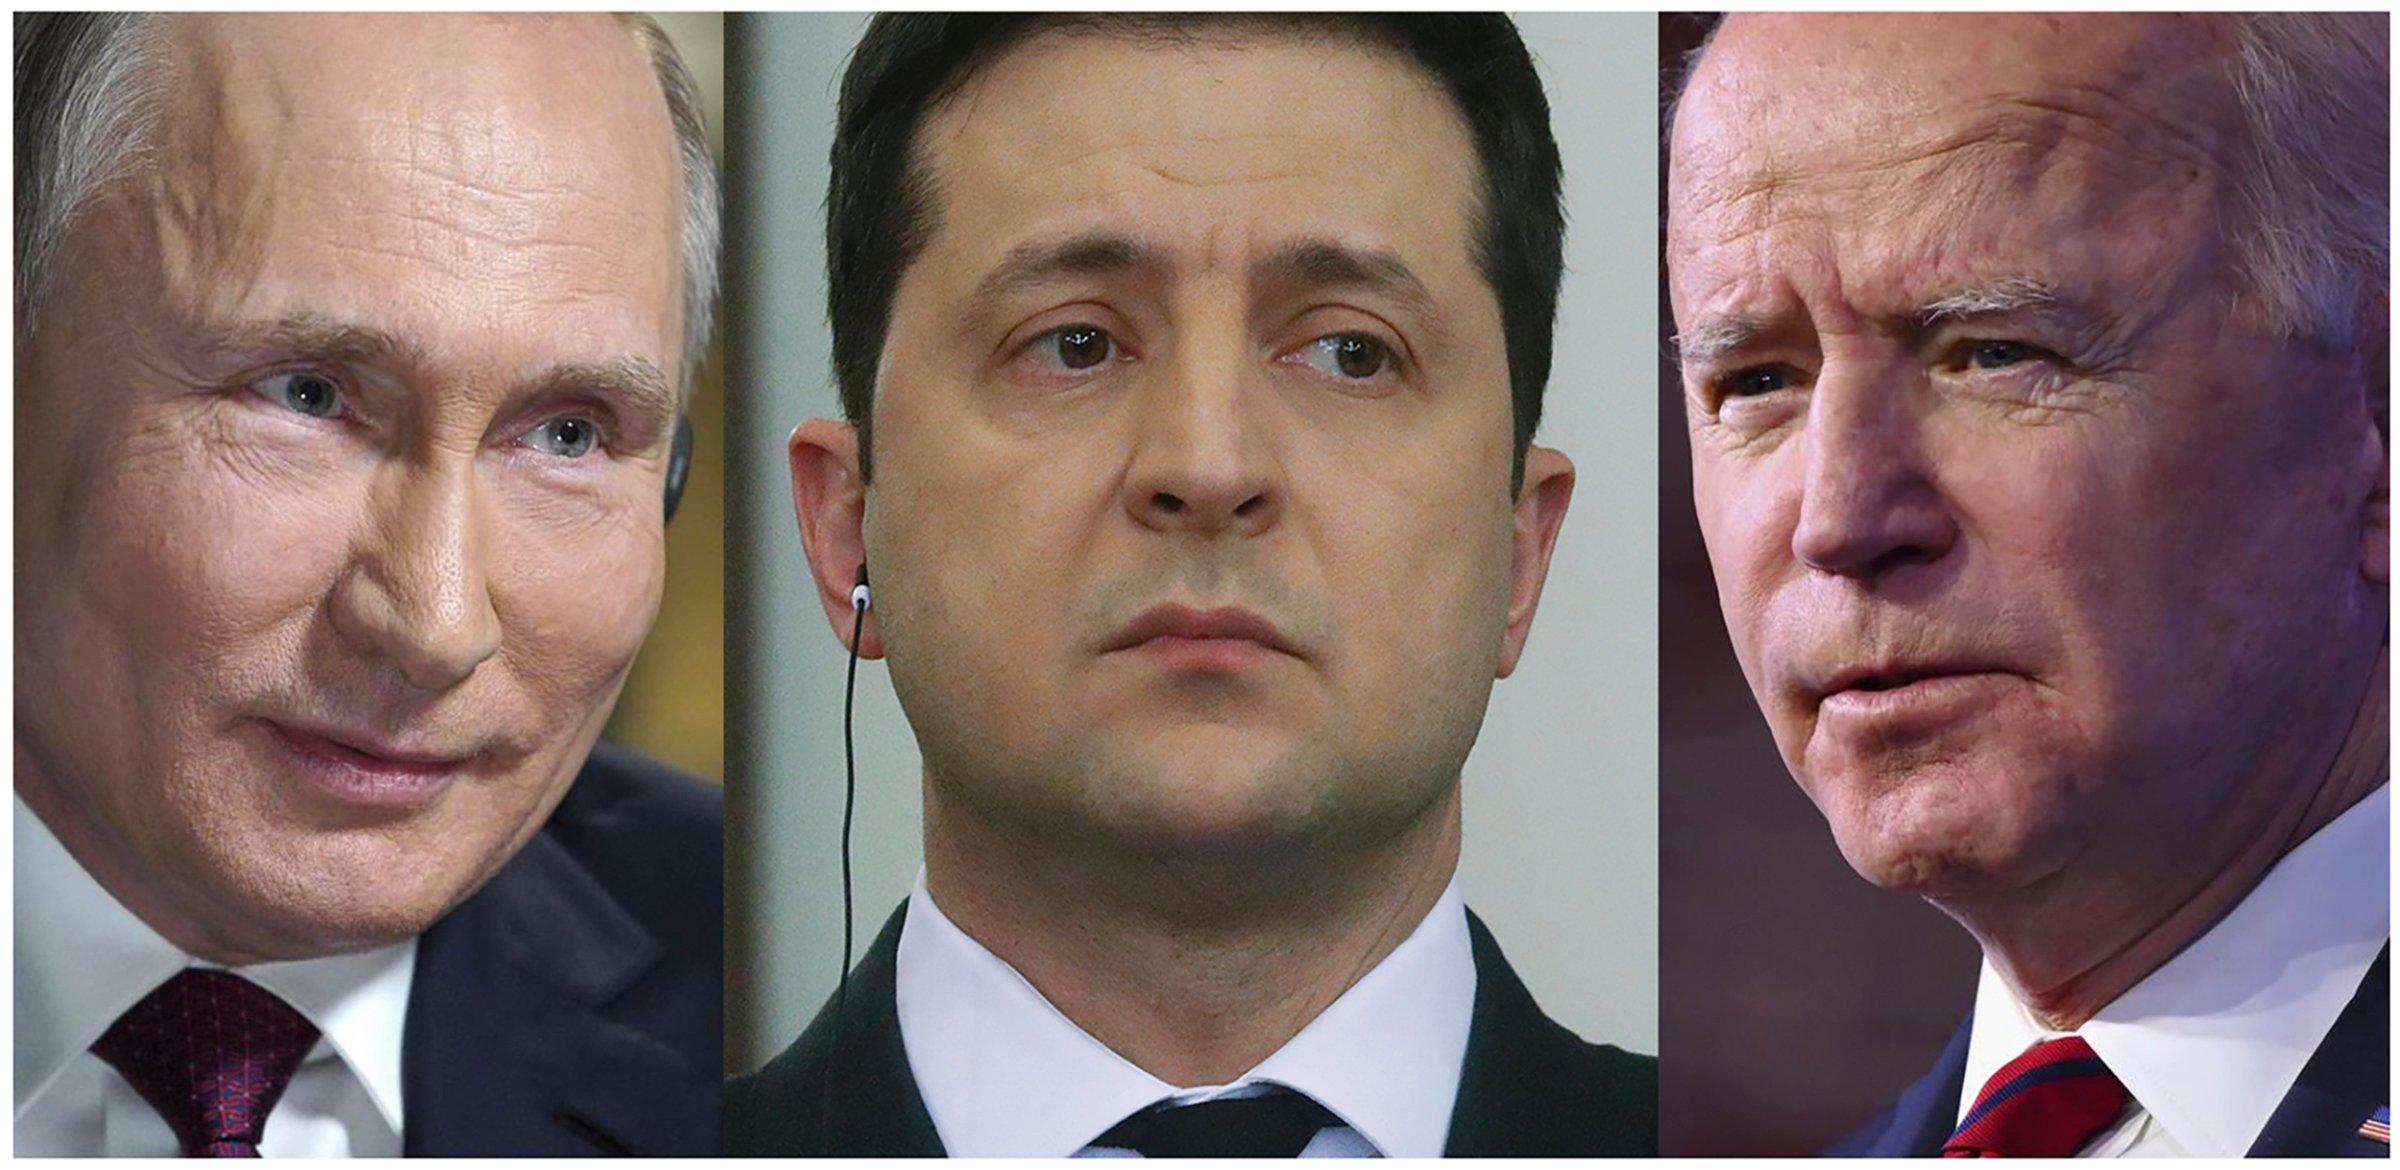 Władminir Putin, Wołodymyr Zełenski, Joe Biden